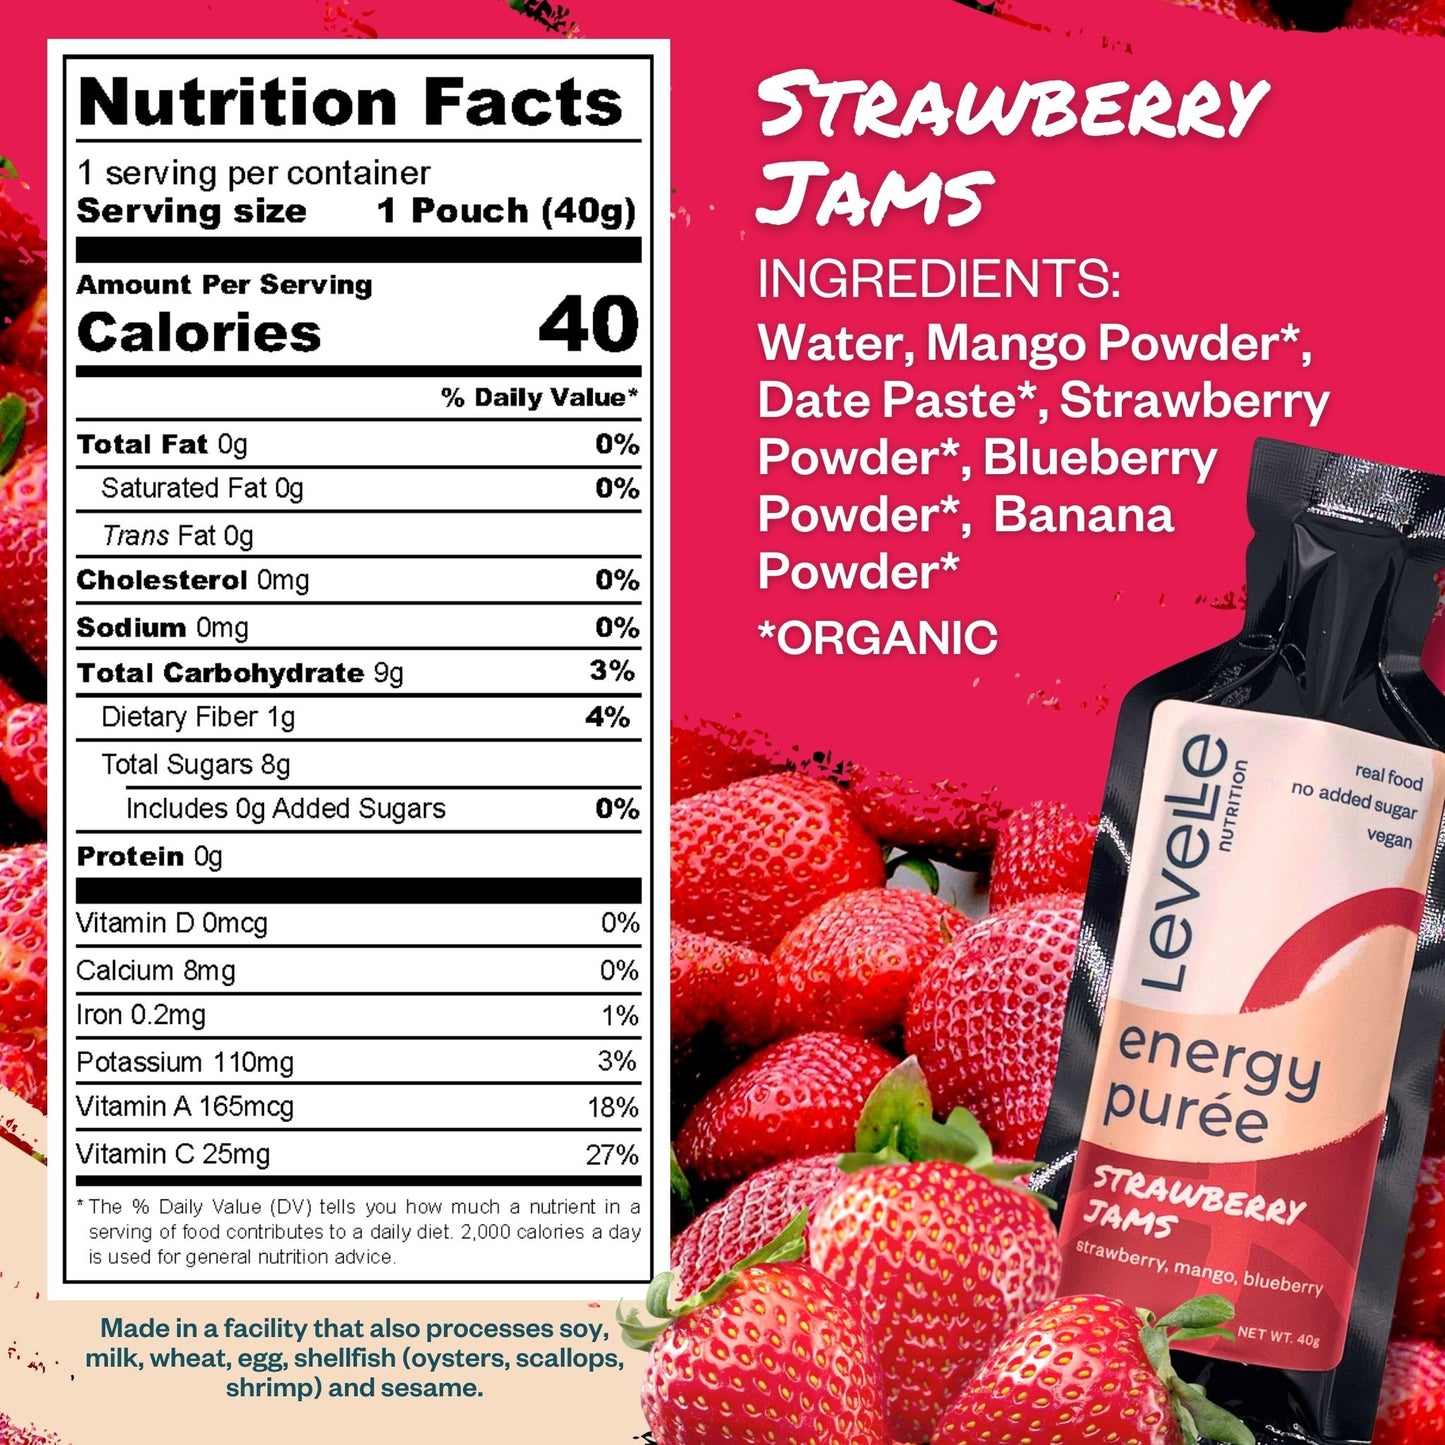 Strawberry Jams Energy Purée - Vegan, GI-Friendly (40g)